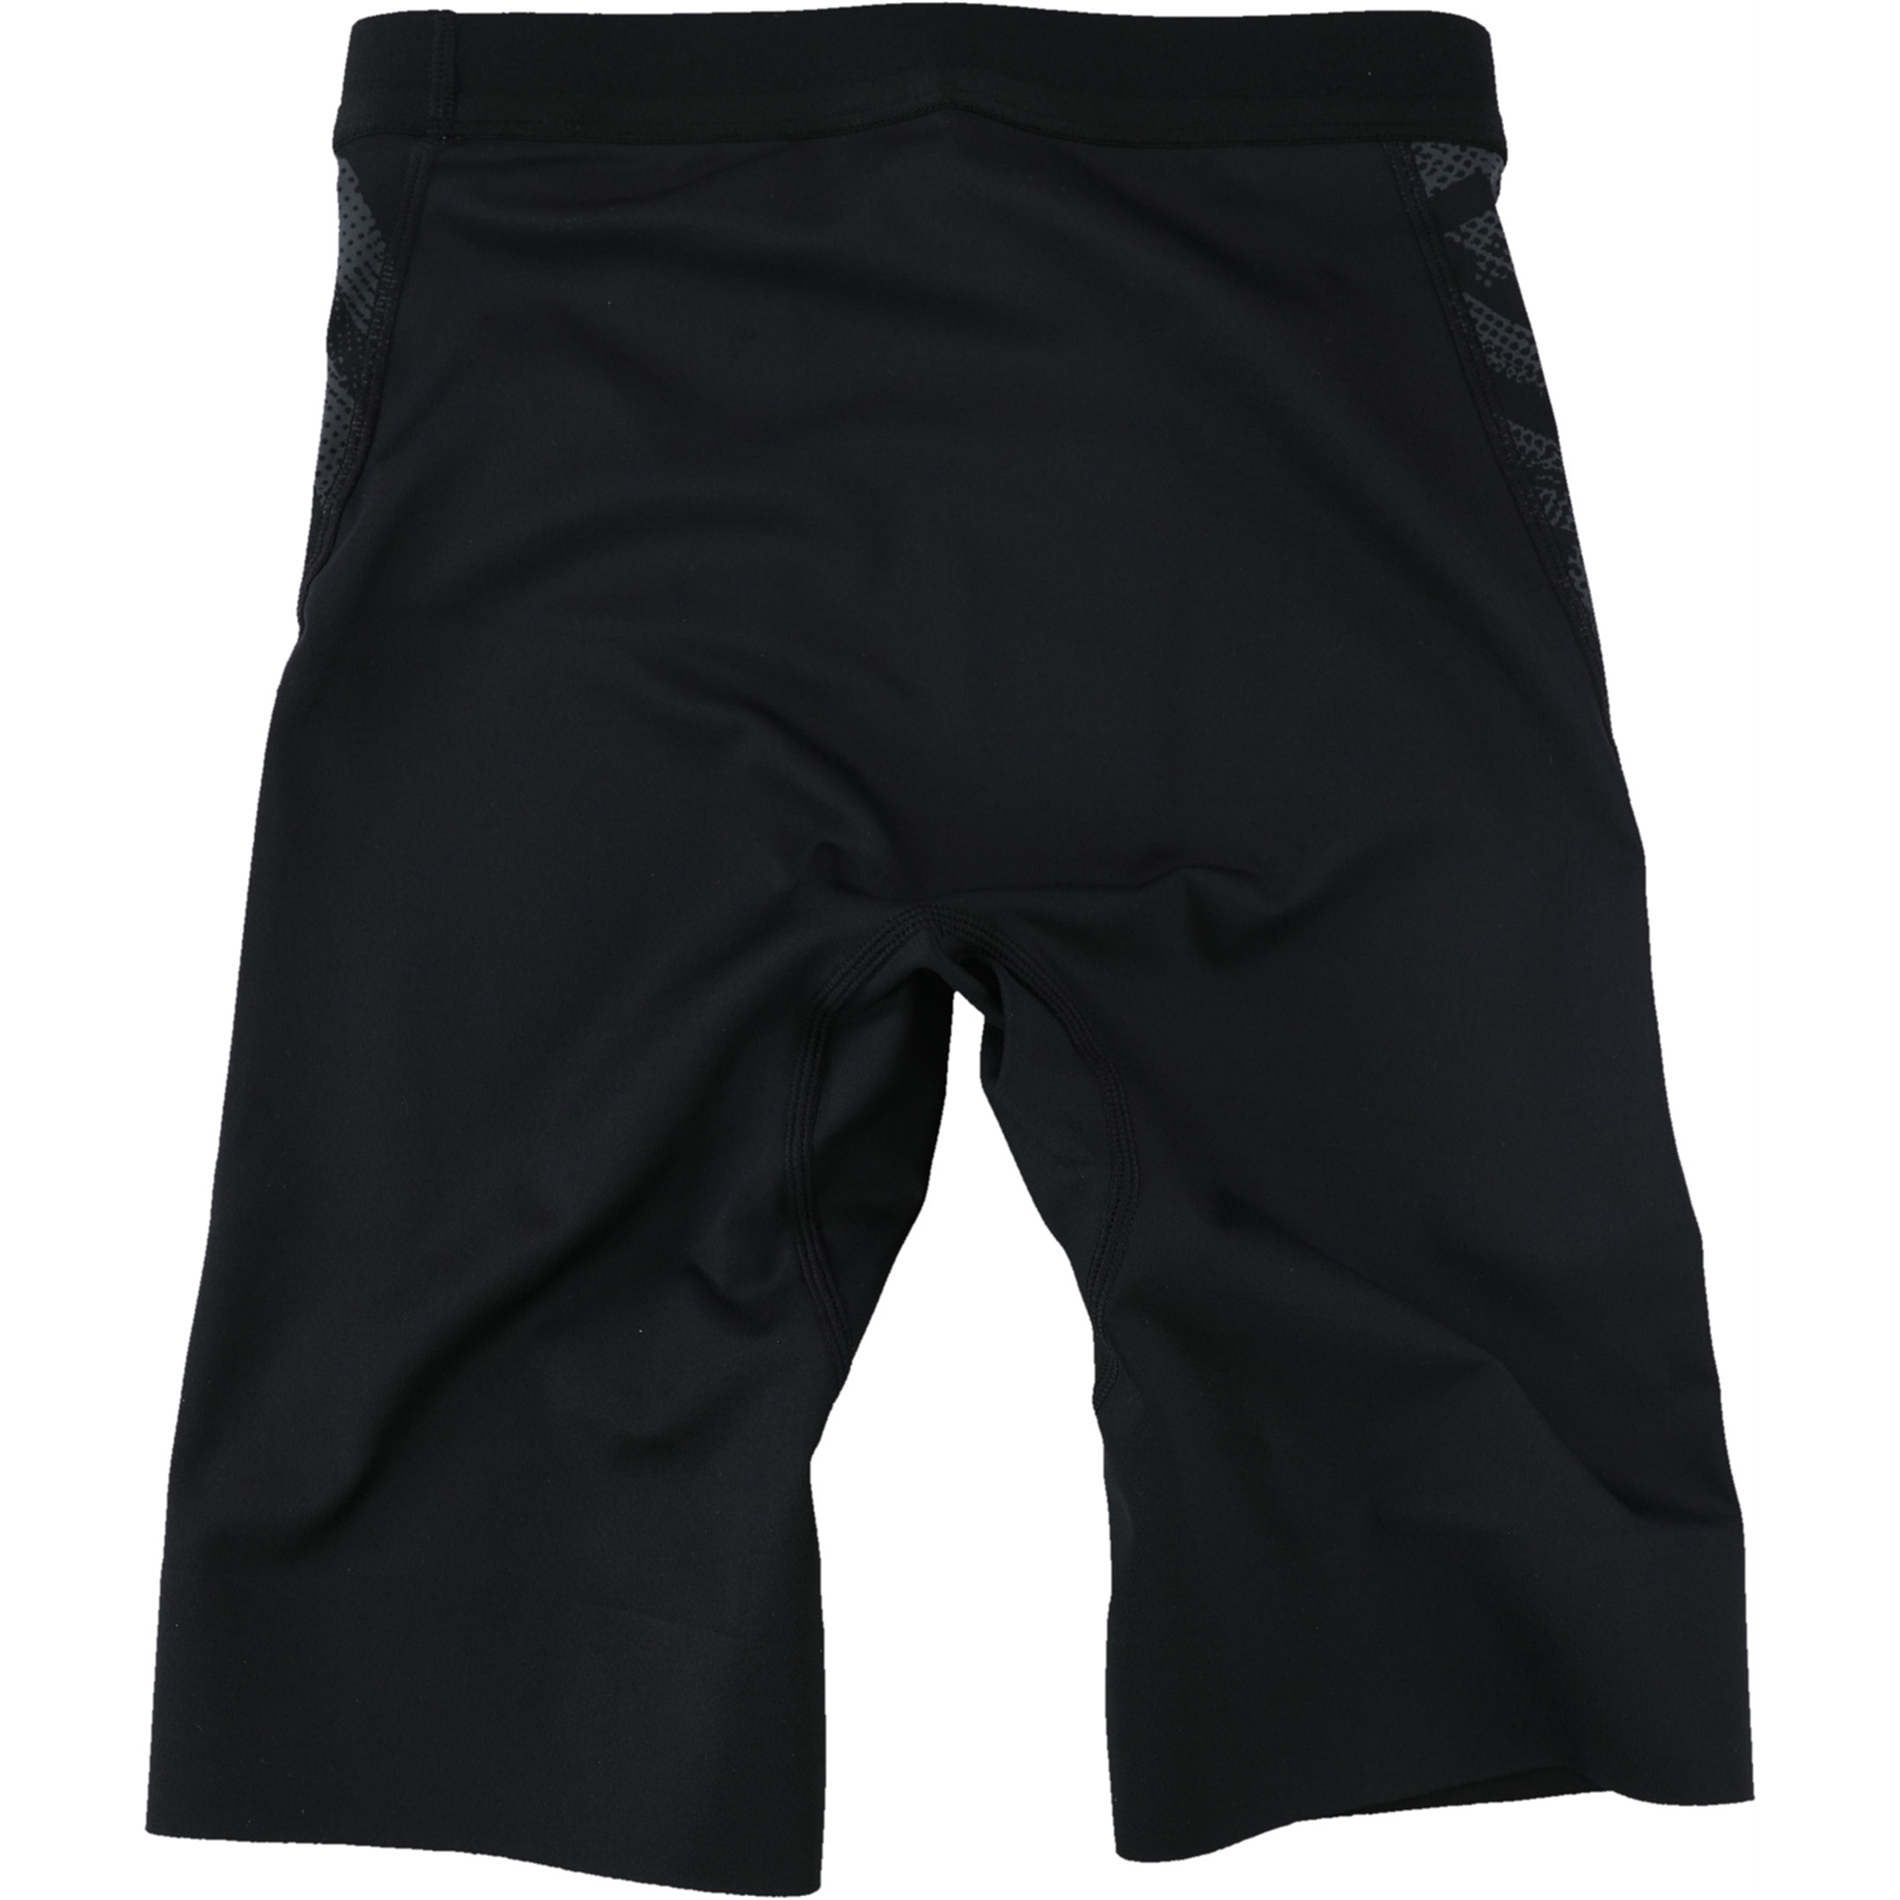 Reebok Mens Crossfit Compression Underwear Boxer Briefs